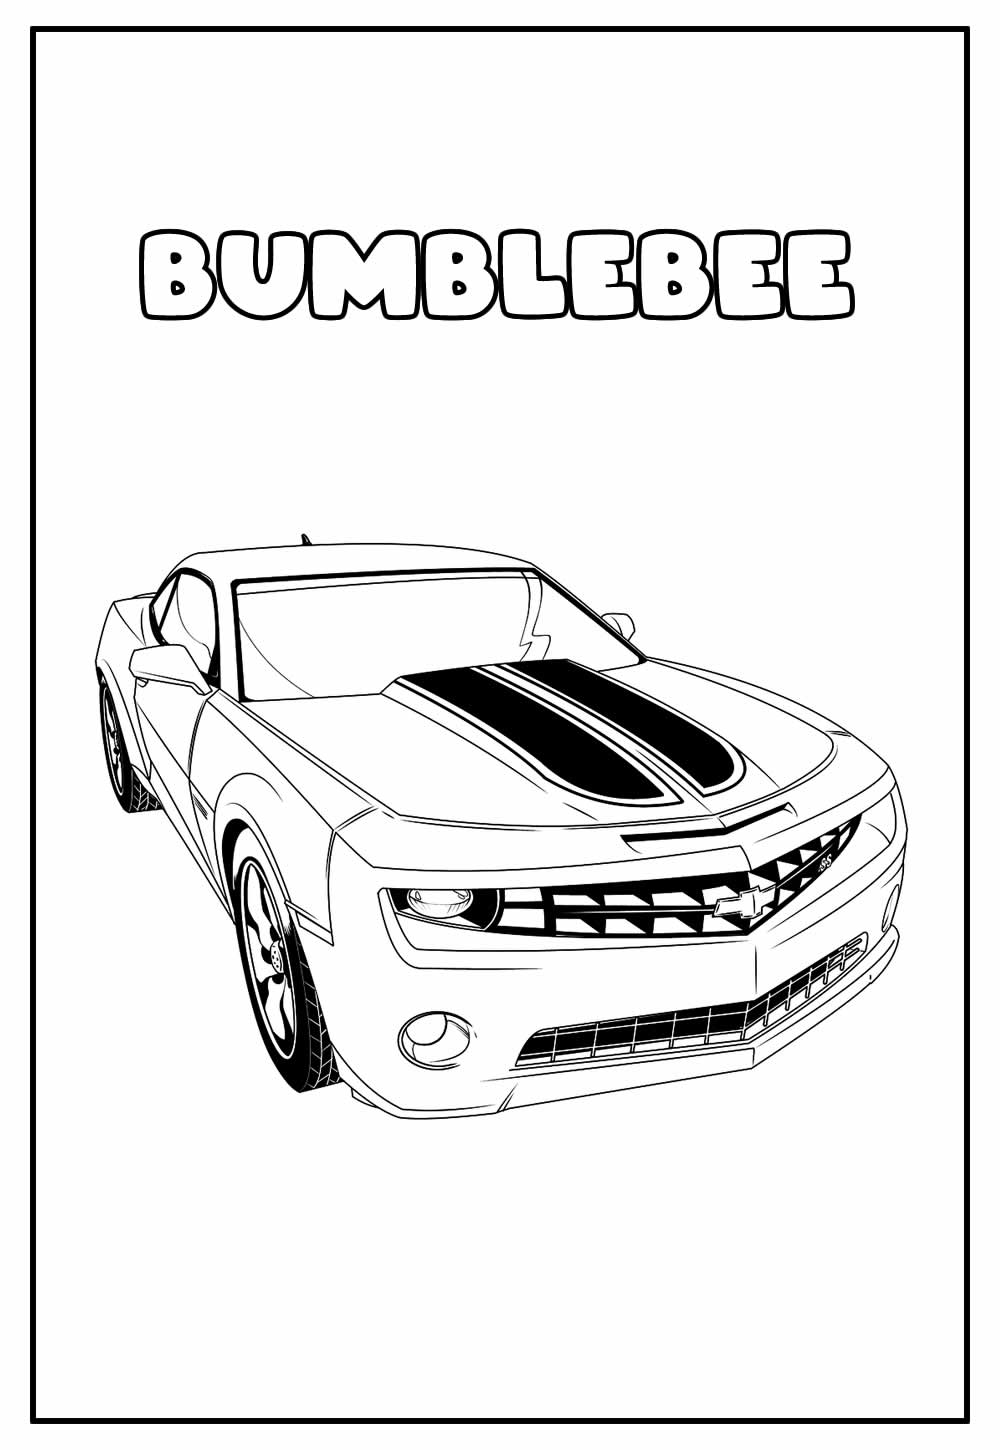 Desenho de Bumblebee para pintar e colorir - Imagem Educativa